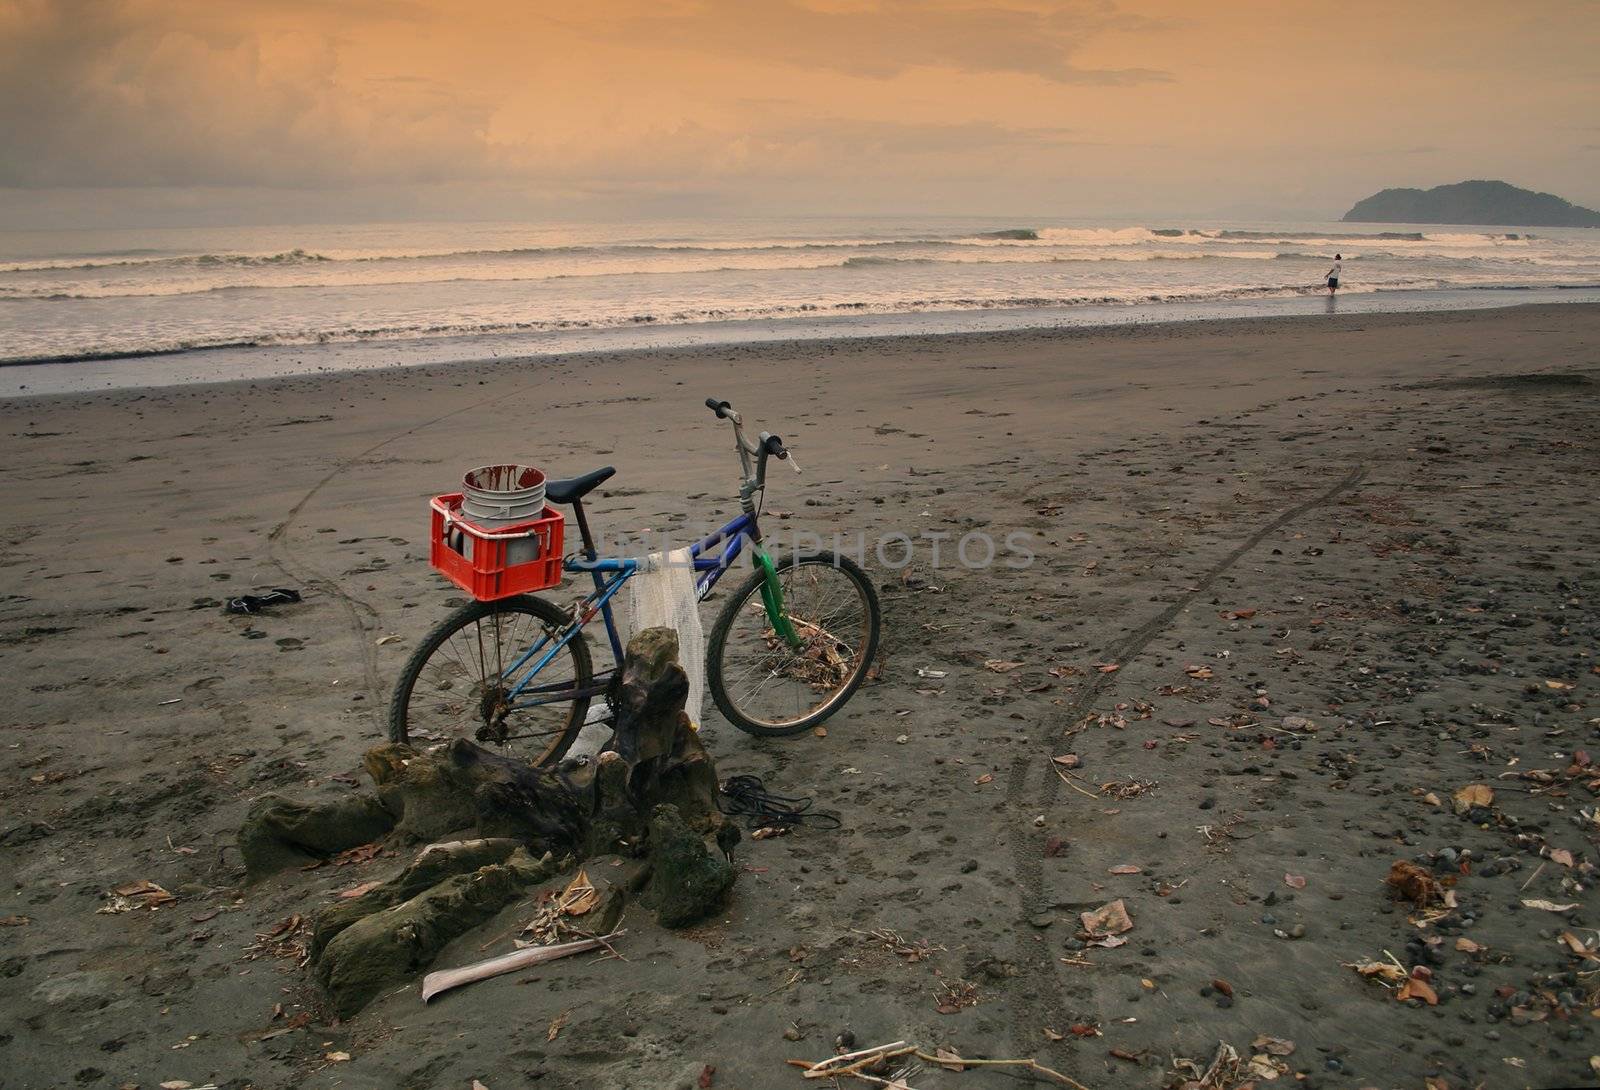 The Fisherman's Bike by Creatista